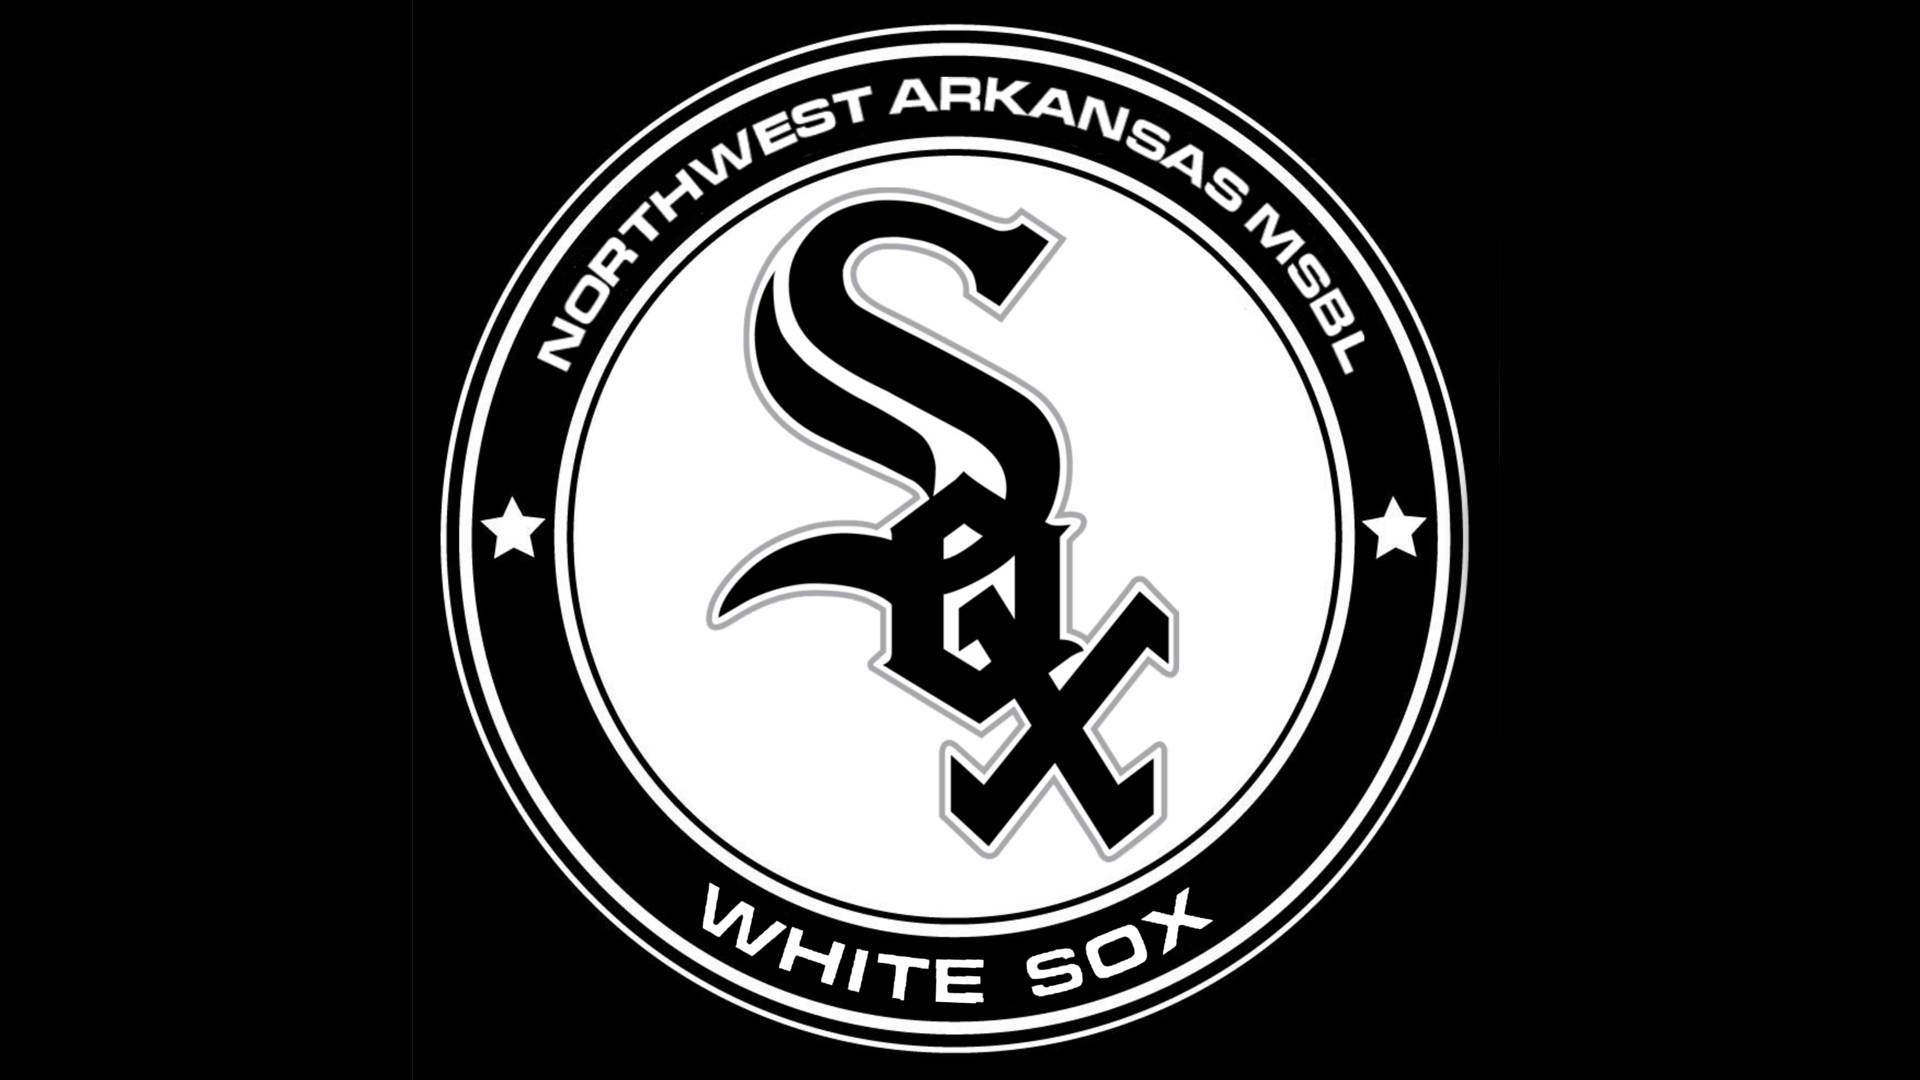 Chicago White Sox Emblem In Black